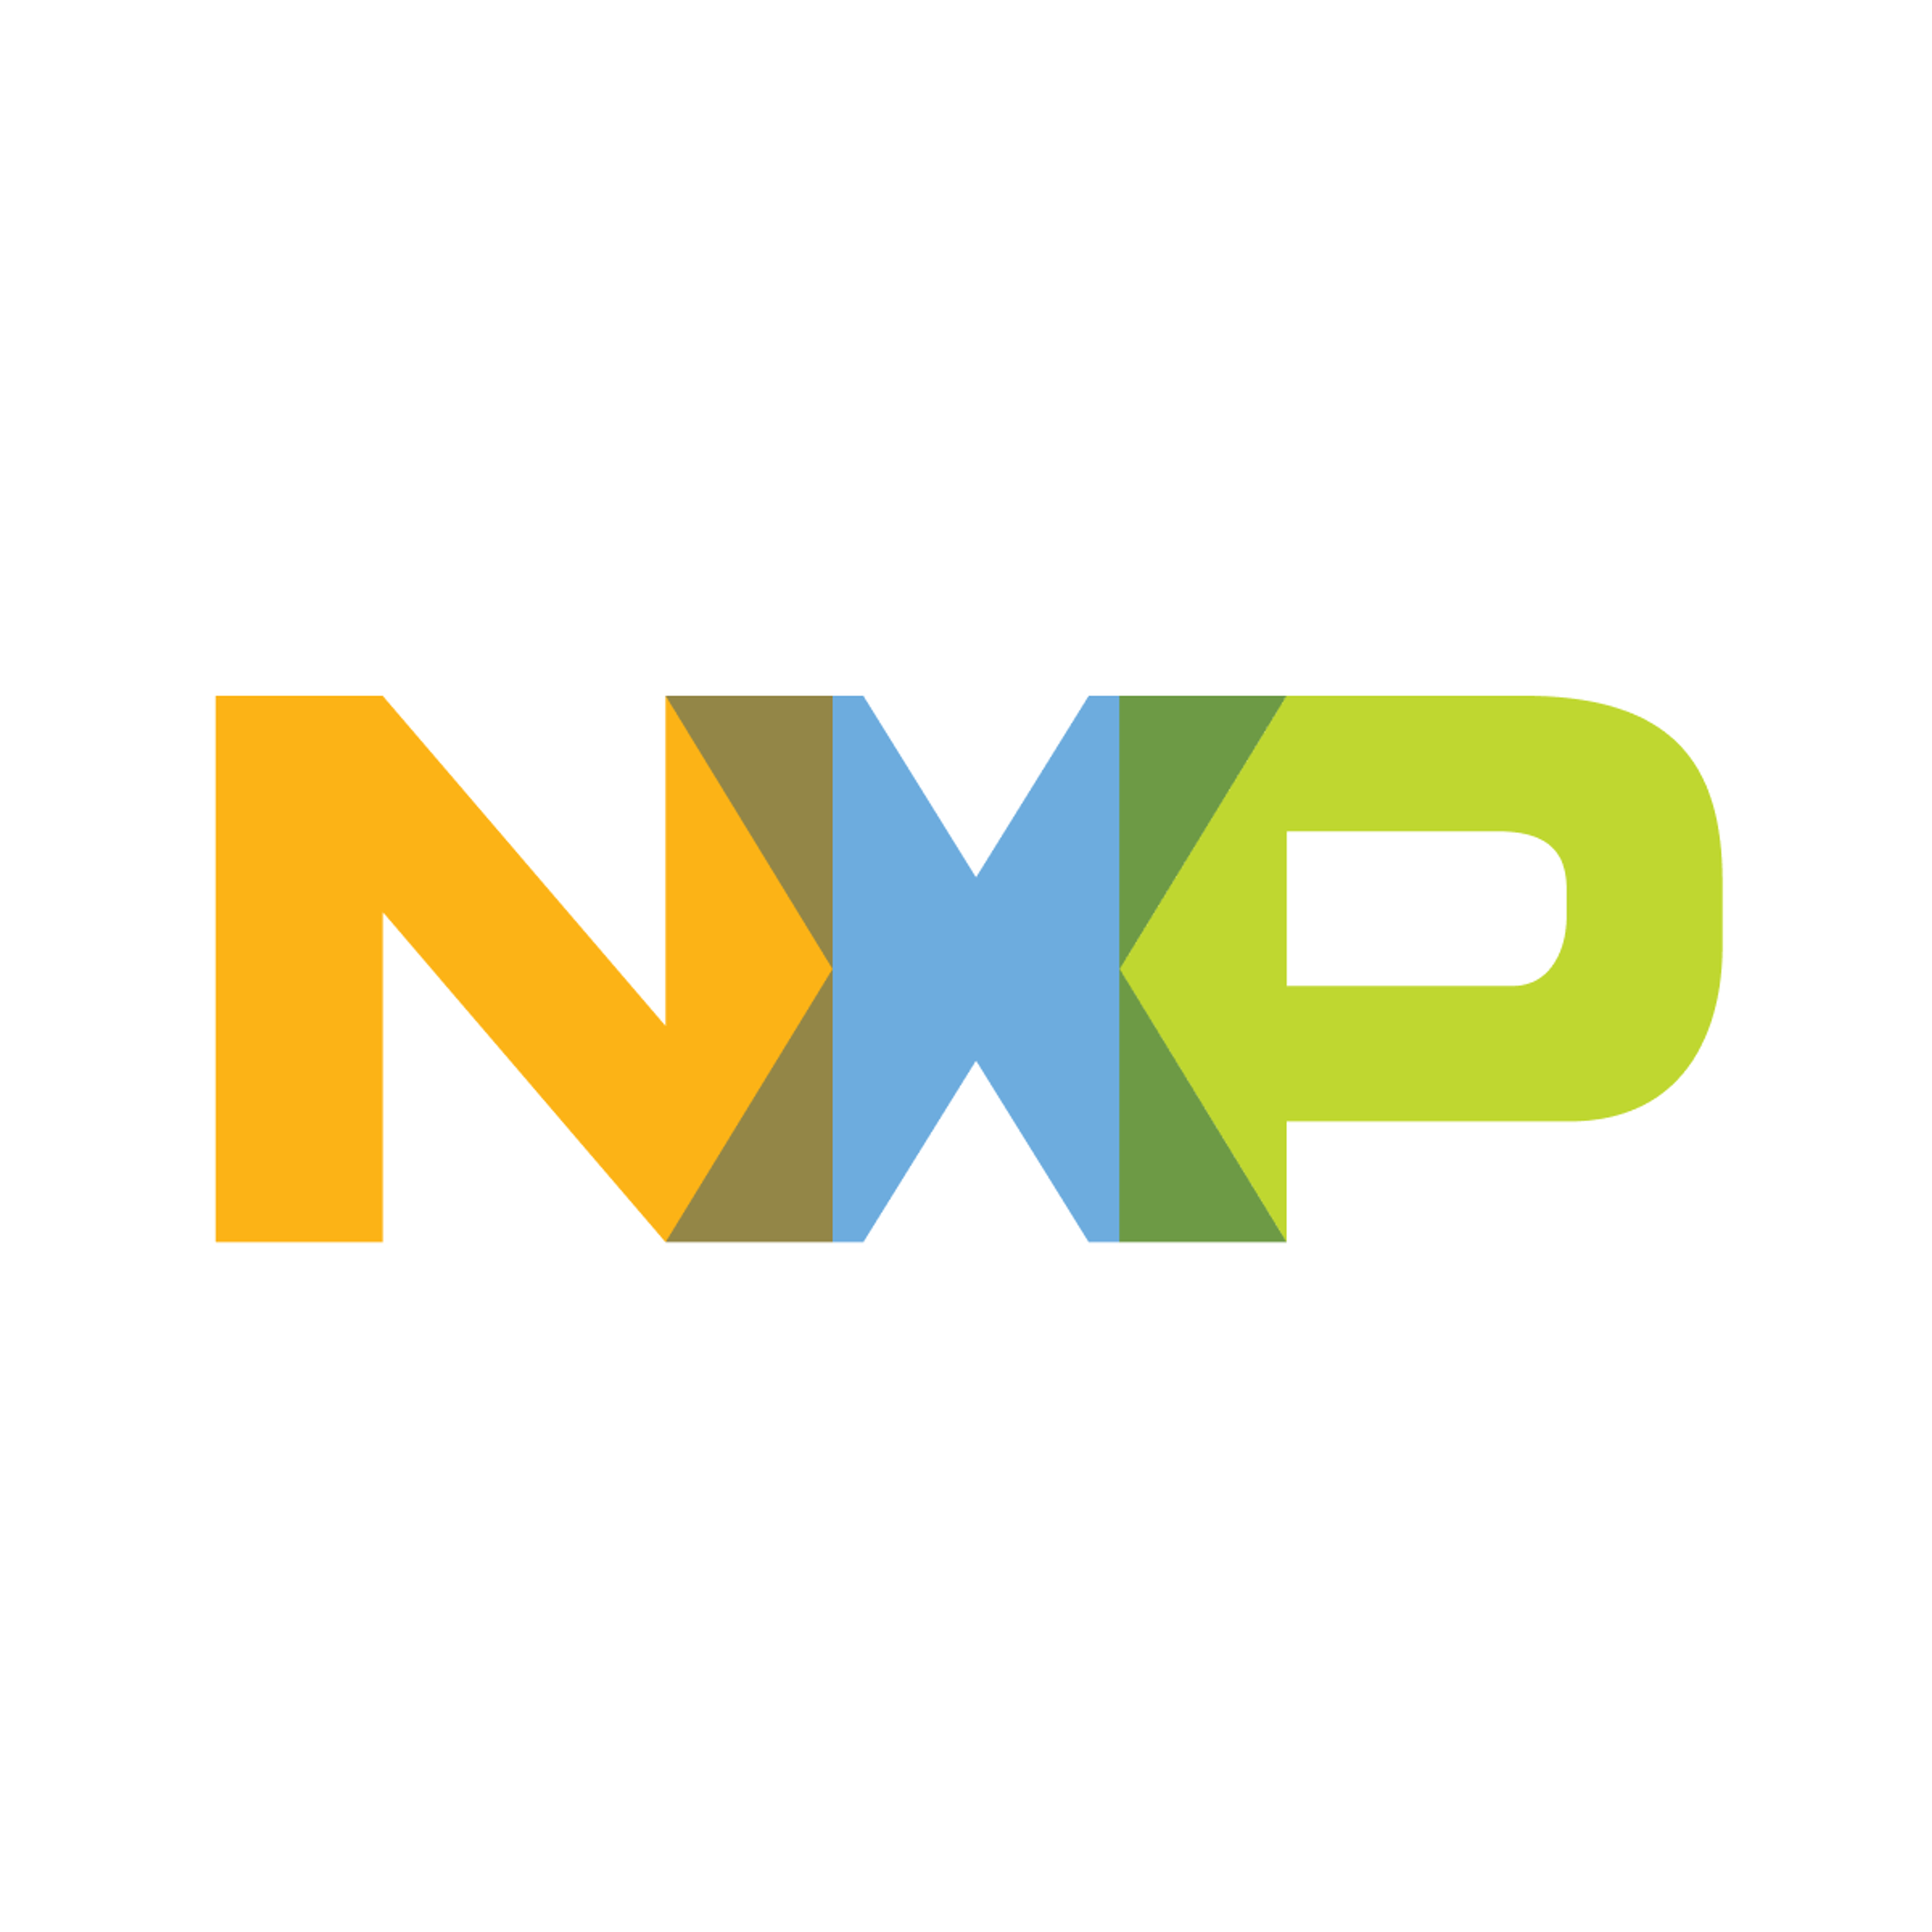 NXP Semiconductors logo